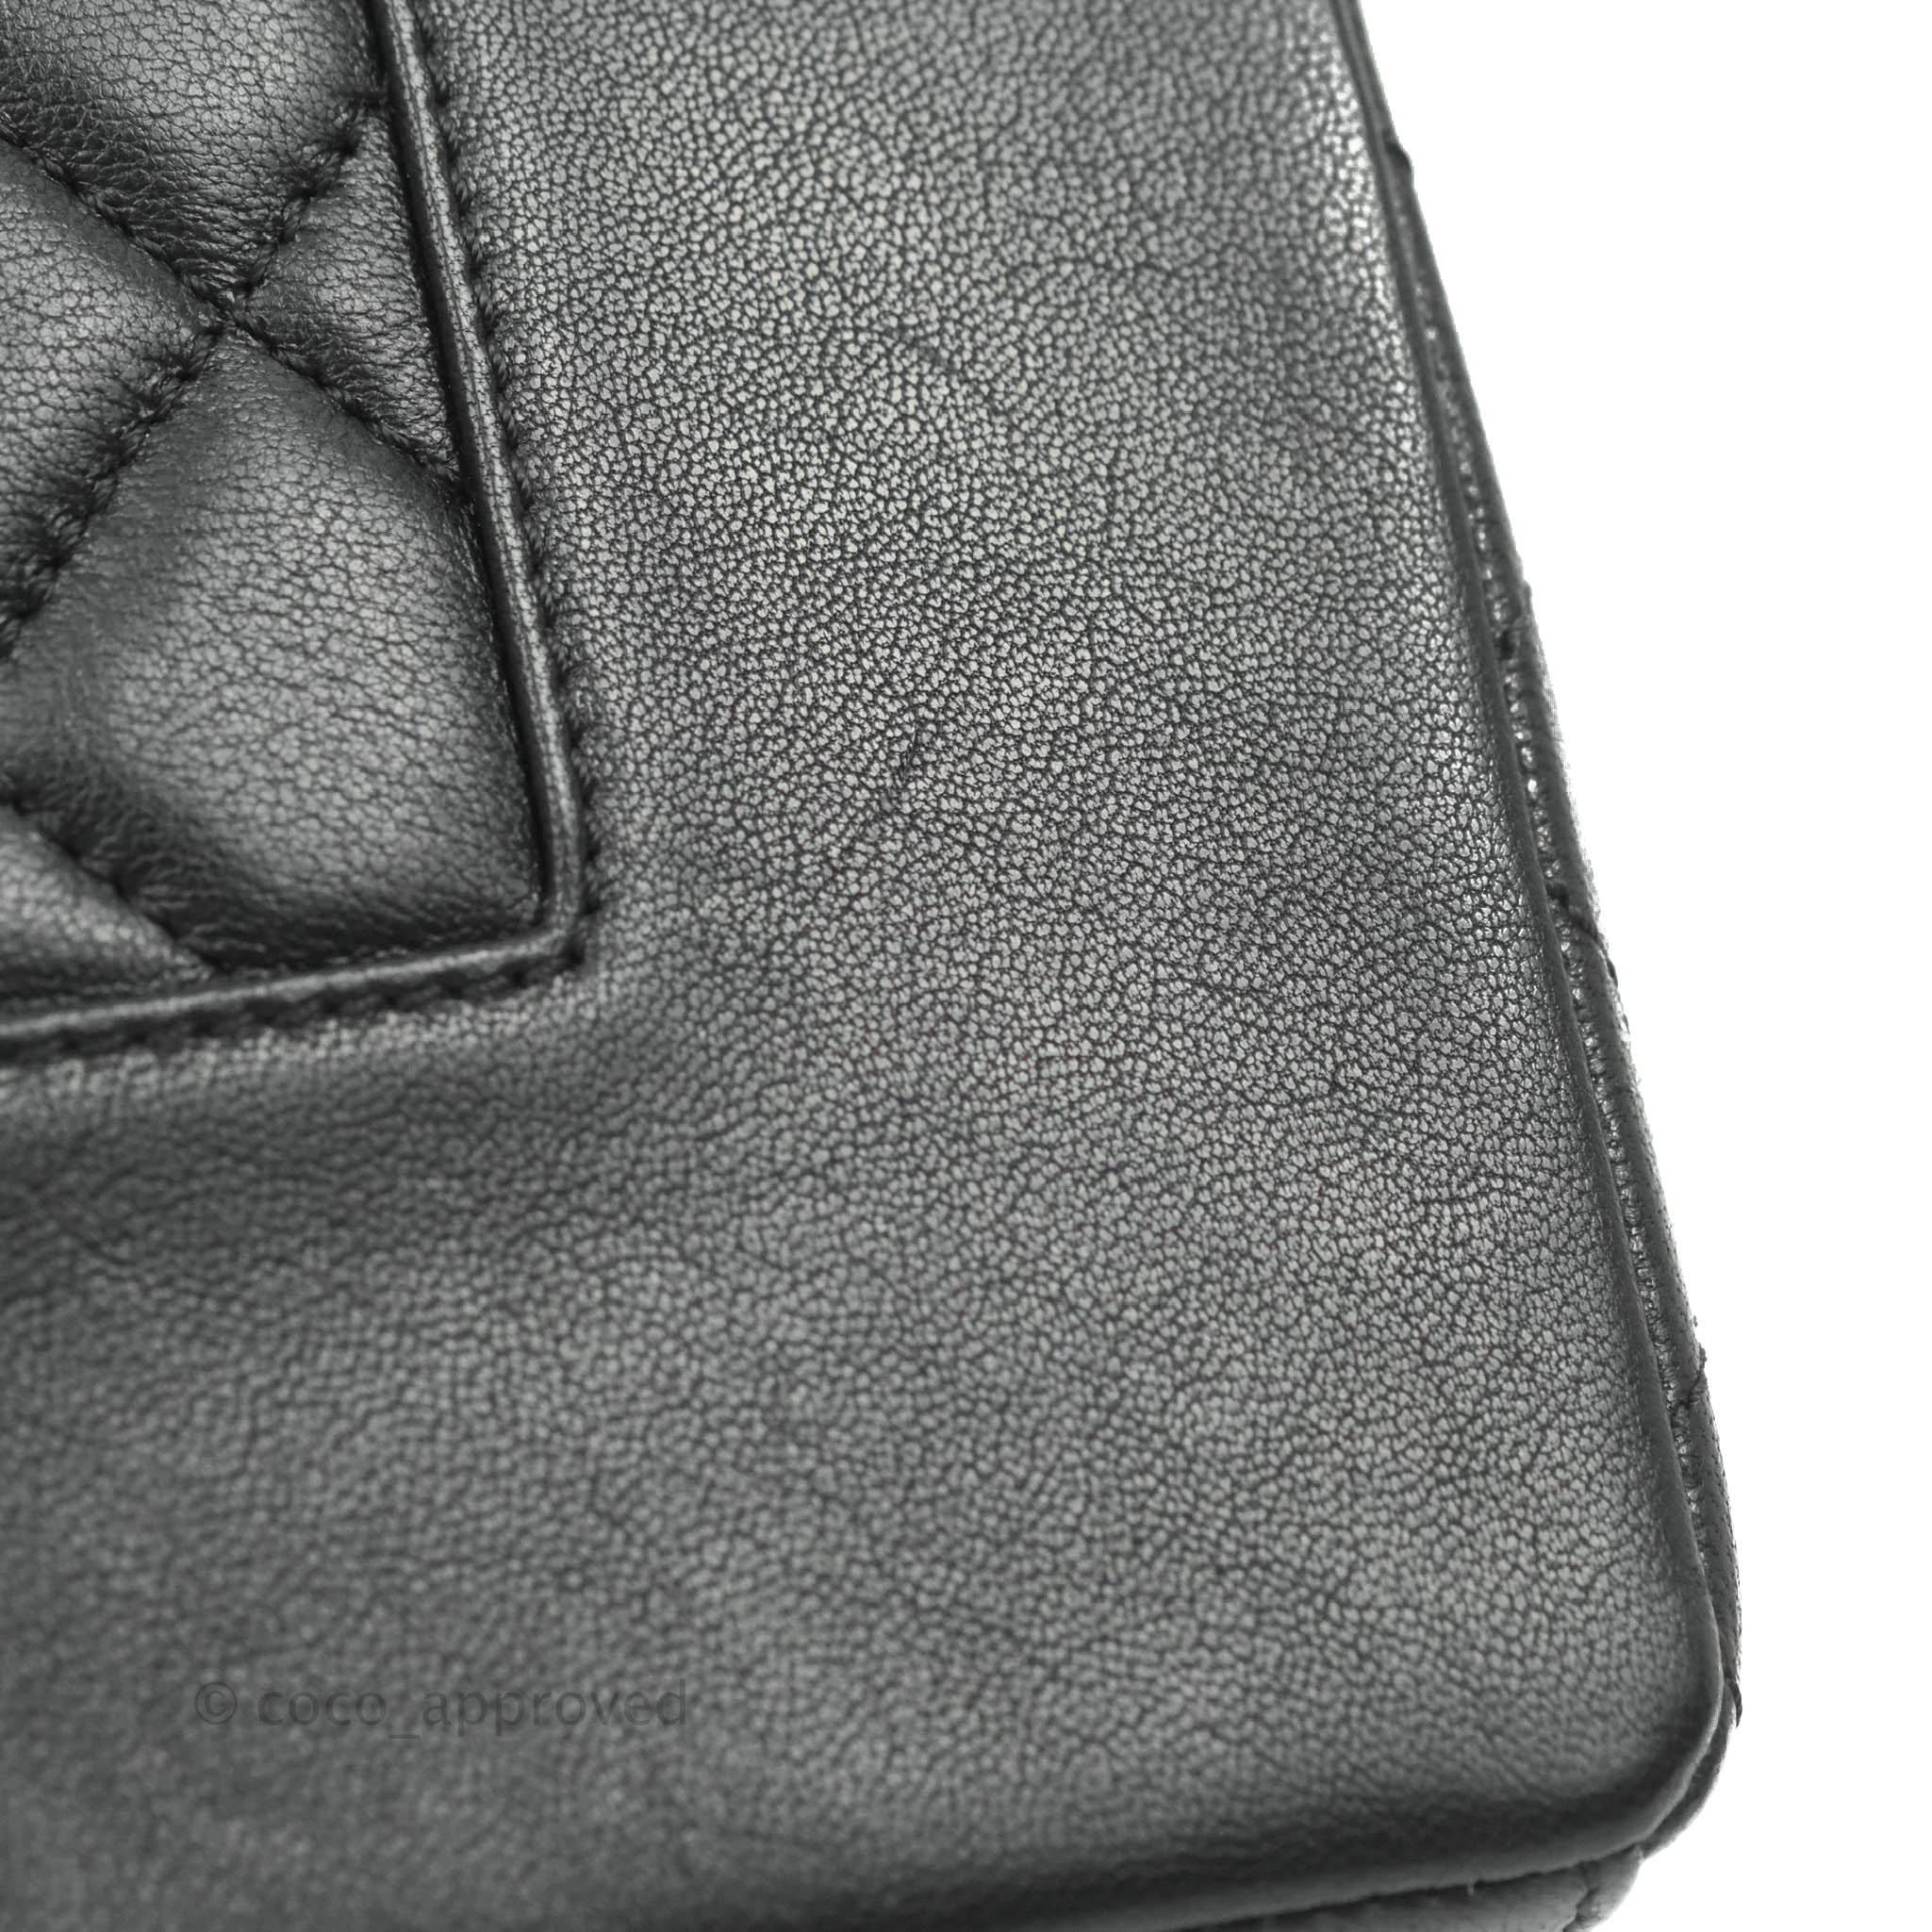 Chanel Vintage Chanel Black Quilted Lambskin Leather Tote Shoulder